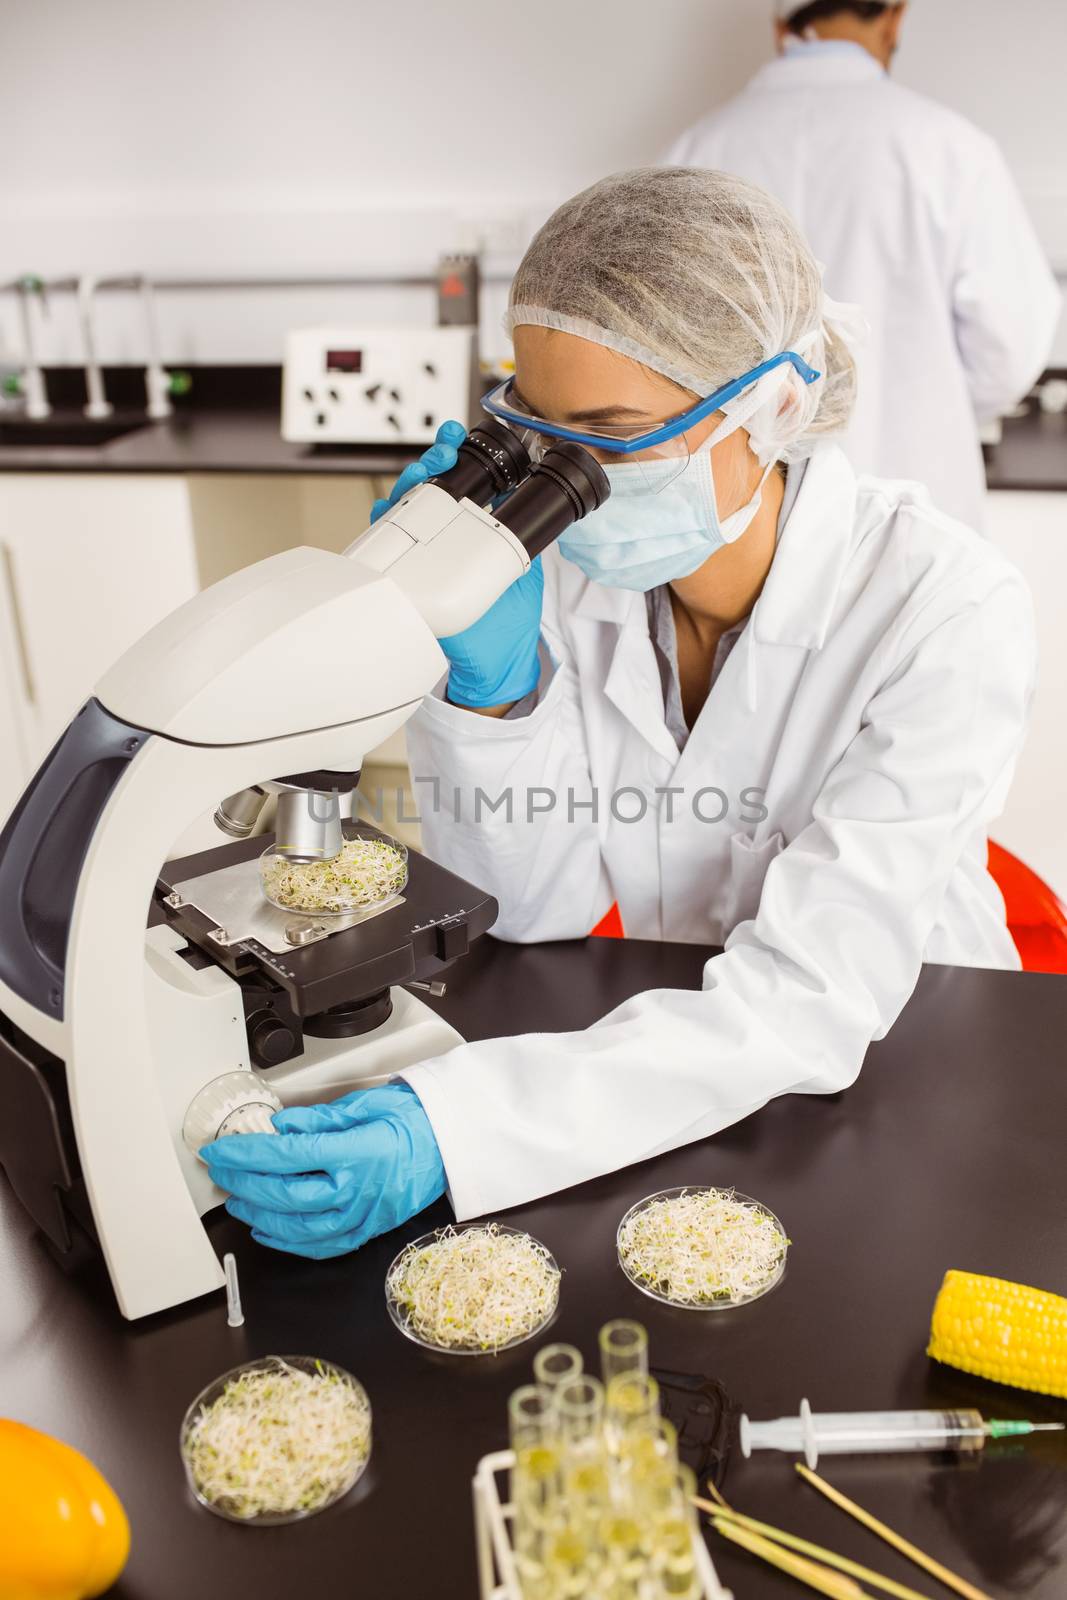 Food scientist looking at petri dish under microscope by Wavebreakmedia